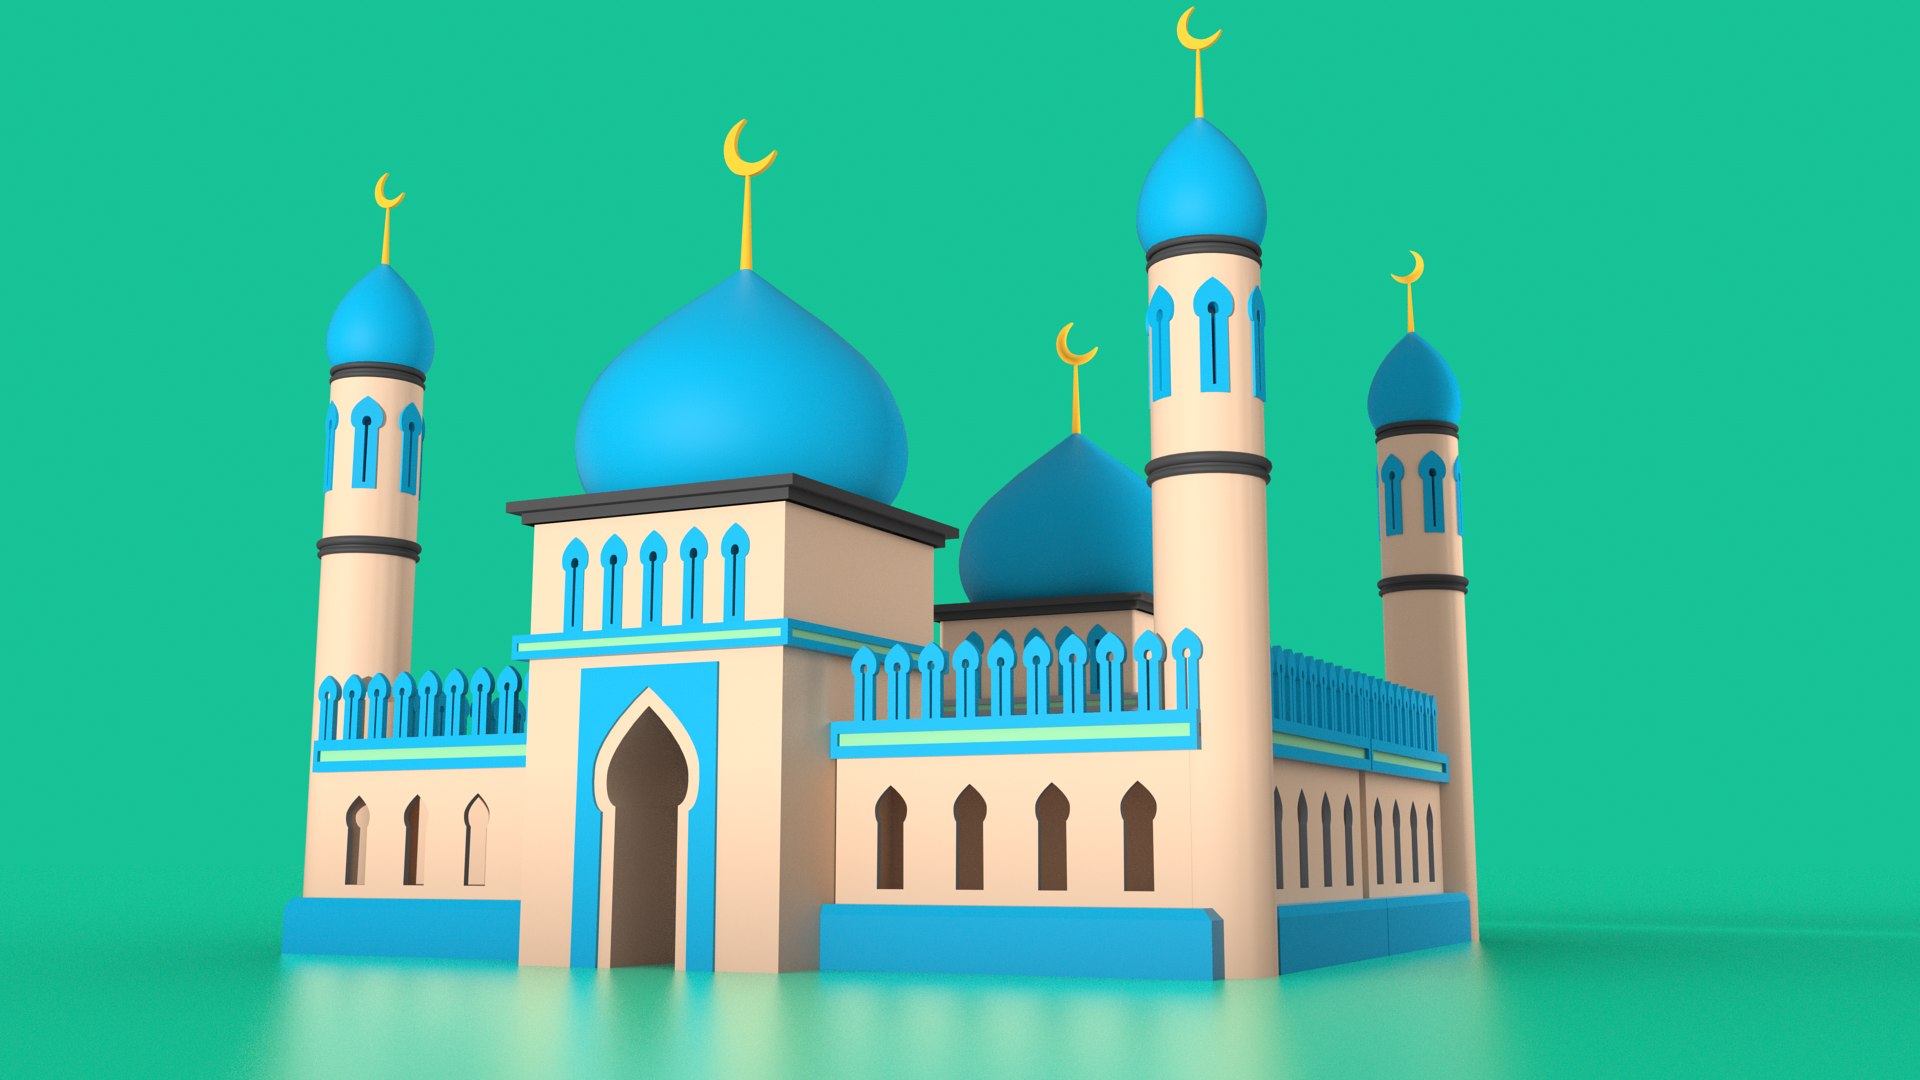 simple mosque model https://p.turbosquid.com/ts-thumb/uN/b5yvpk/C7/1/png/1620823215/1920x1080/fit_q87/24918f7a206db98deb199b6f877d55a6095ae093/1.jpg